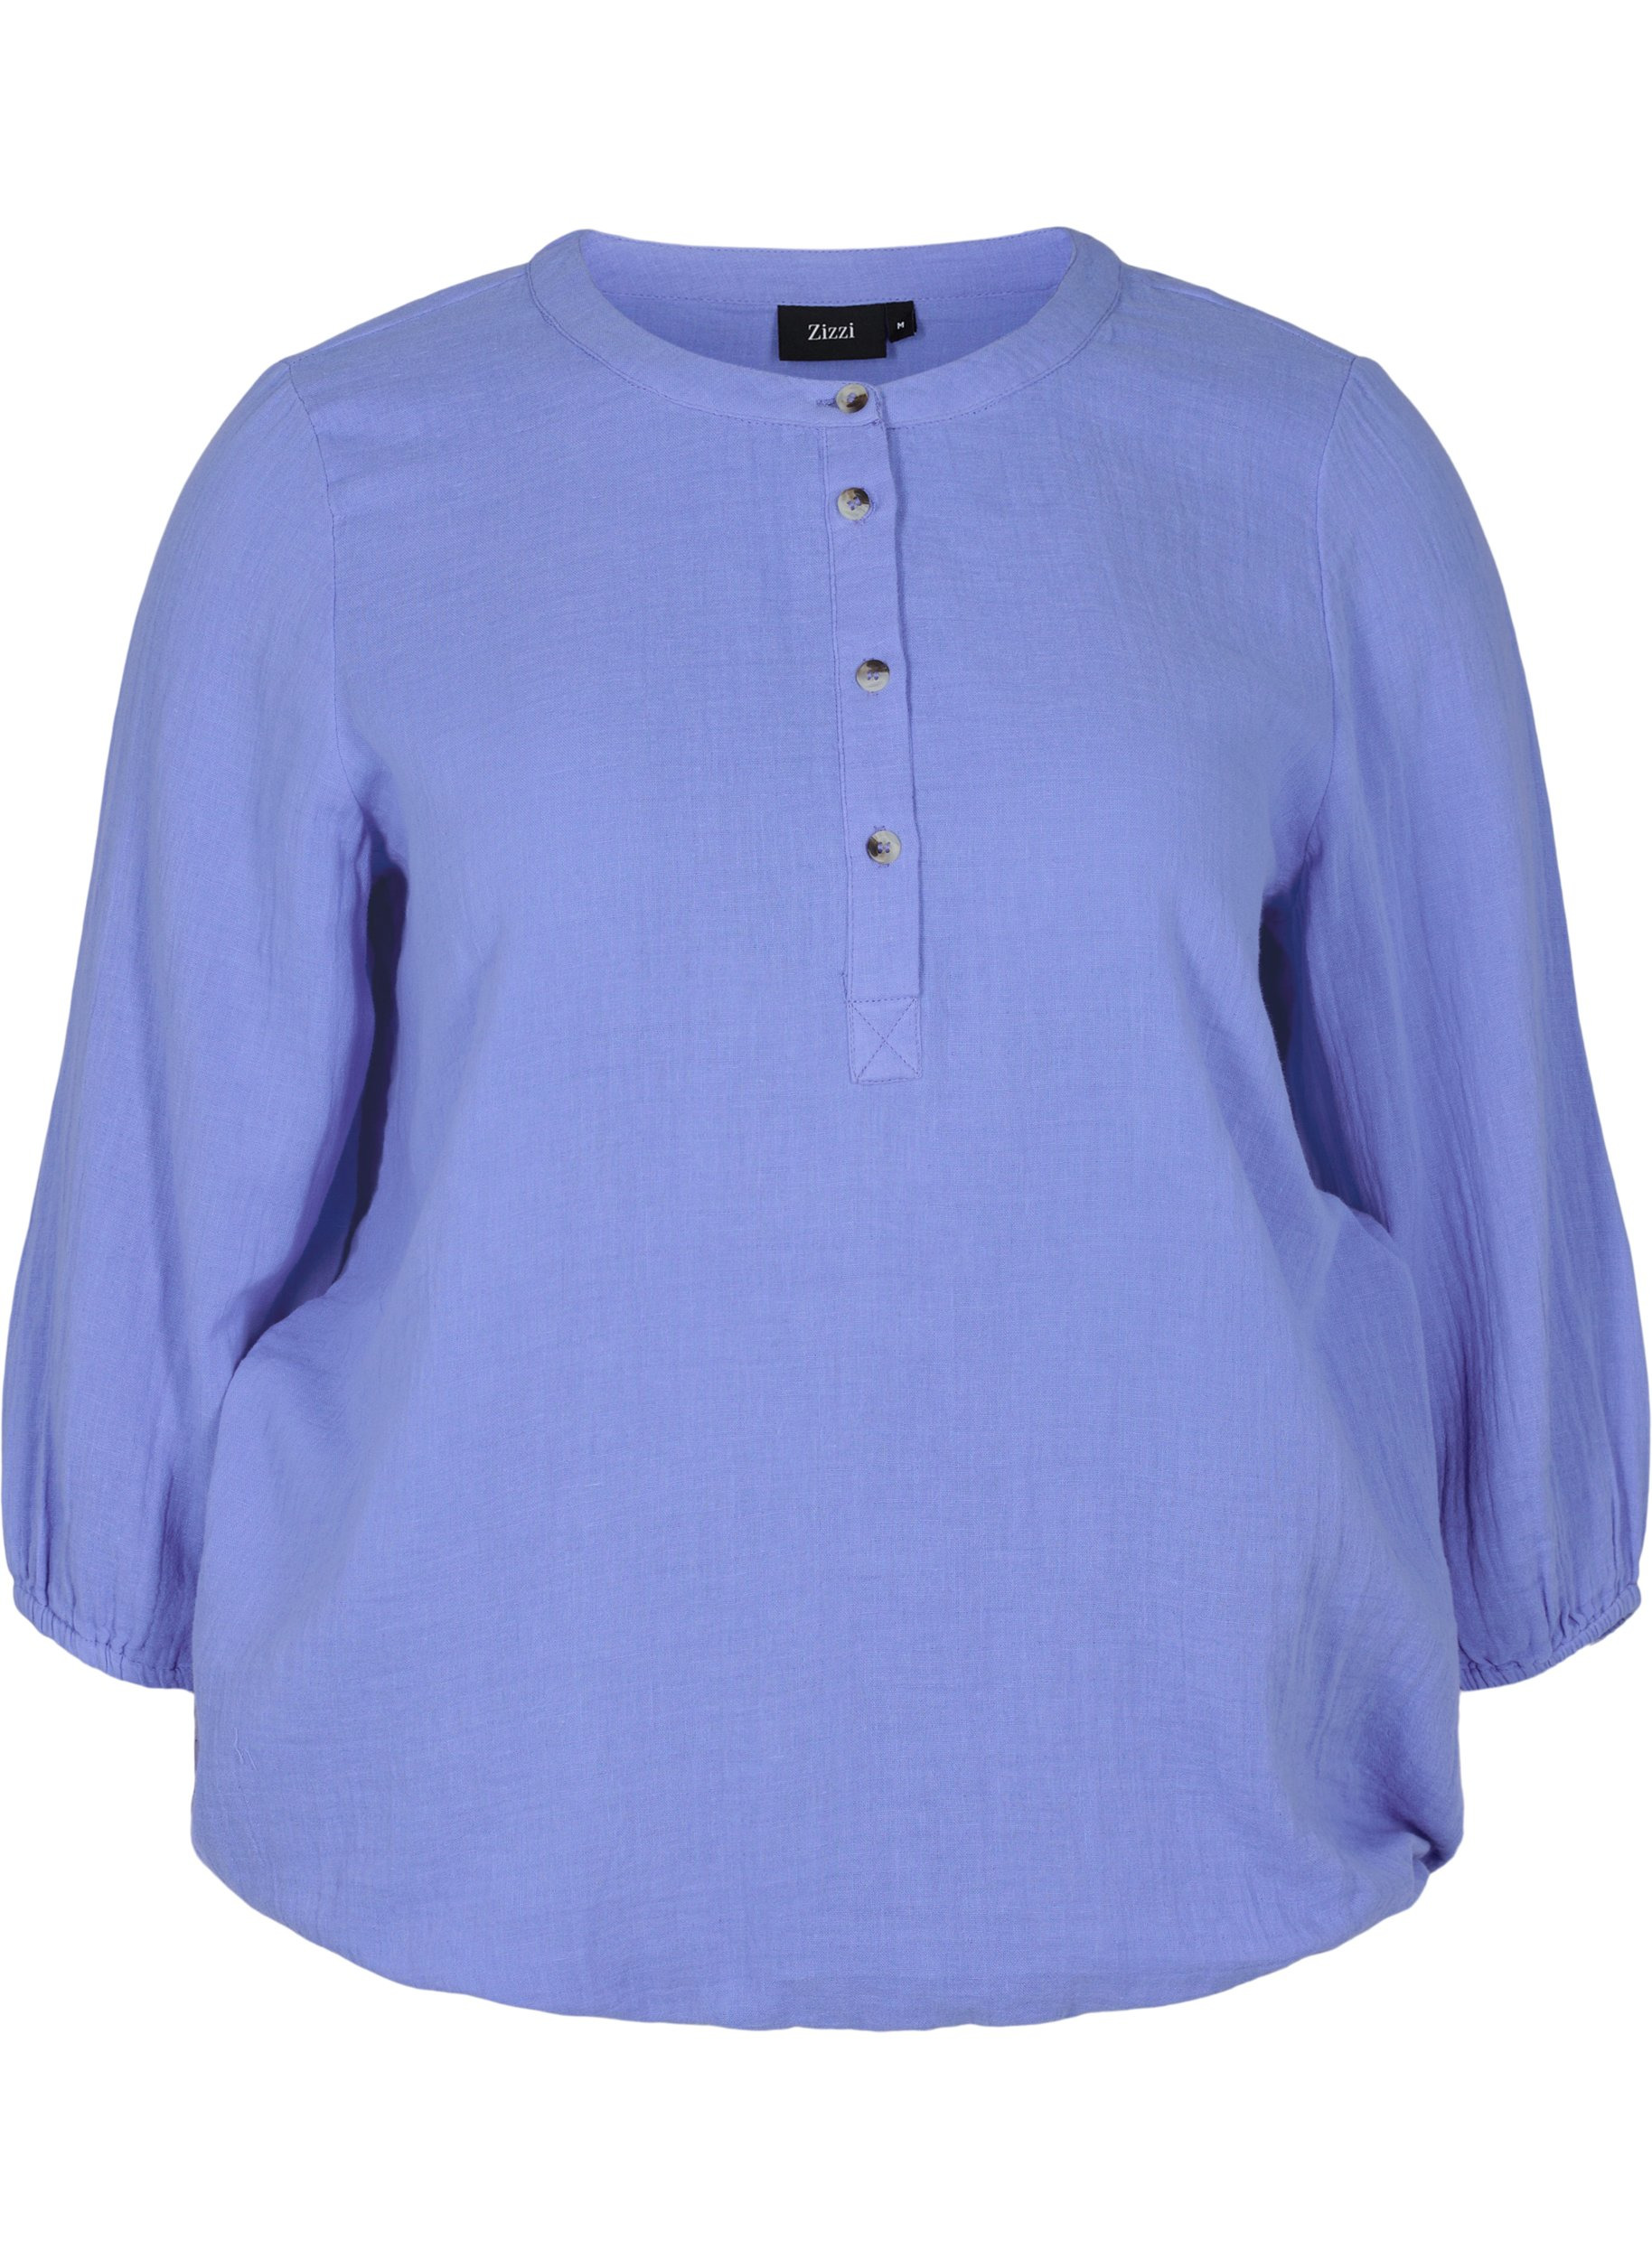 Bomulds bluse med knapper og 3/4 ærmer, Ultramarine